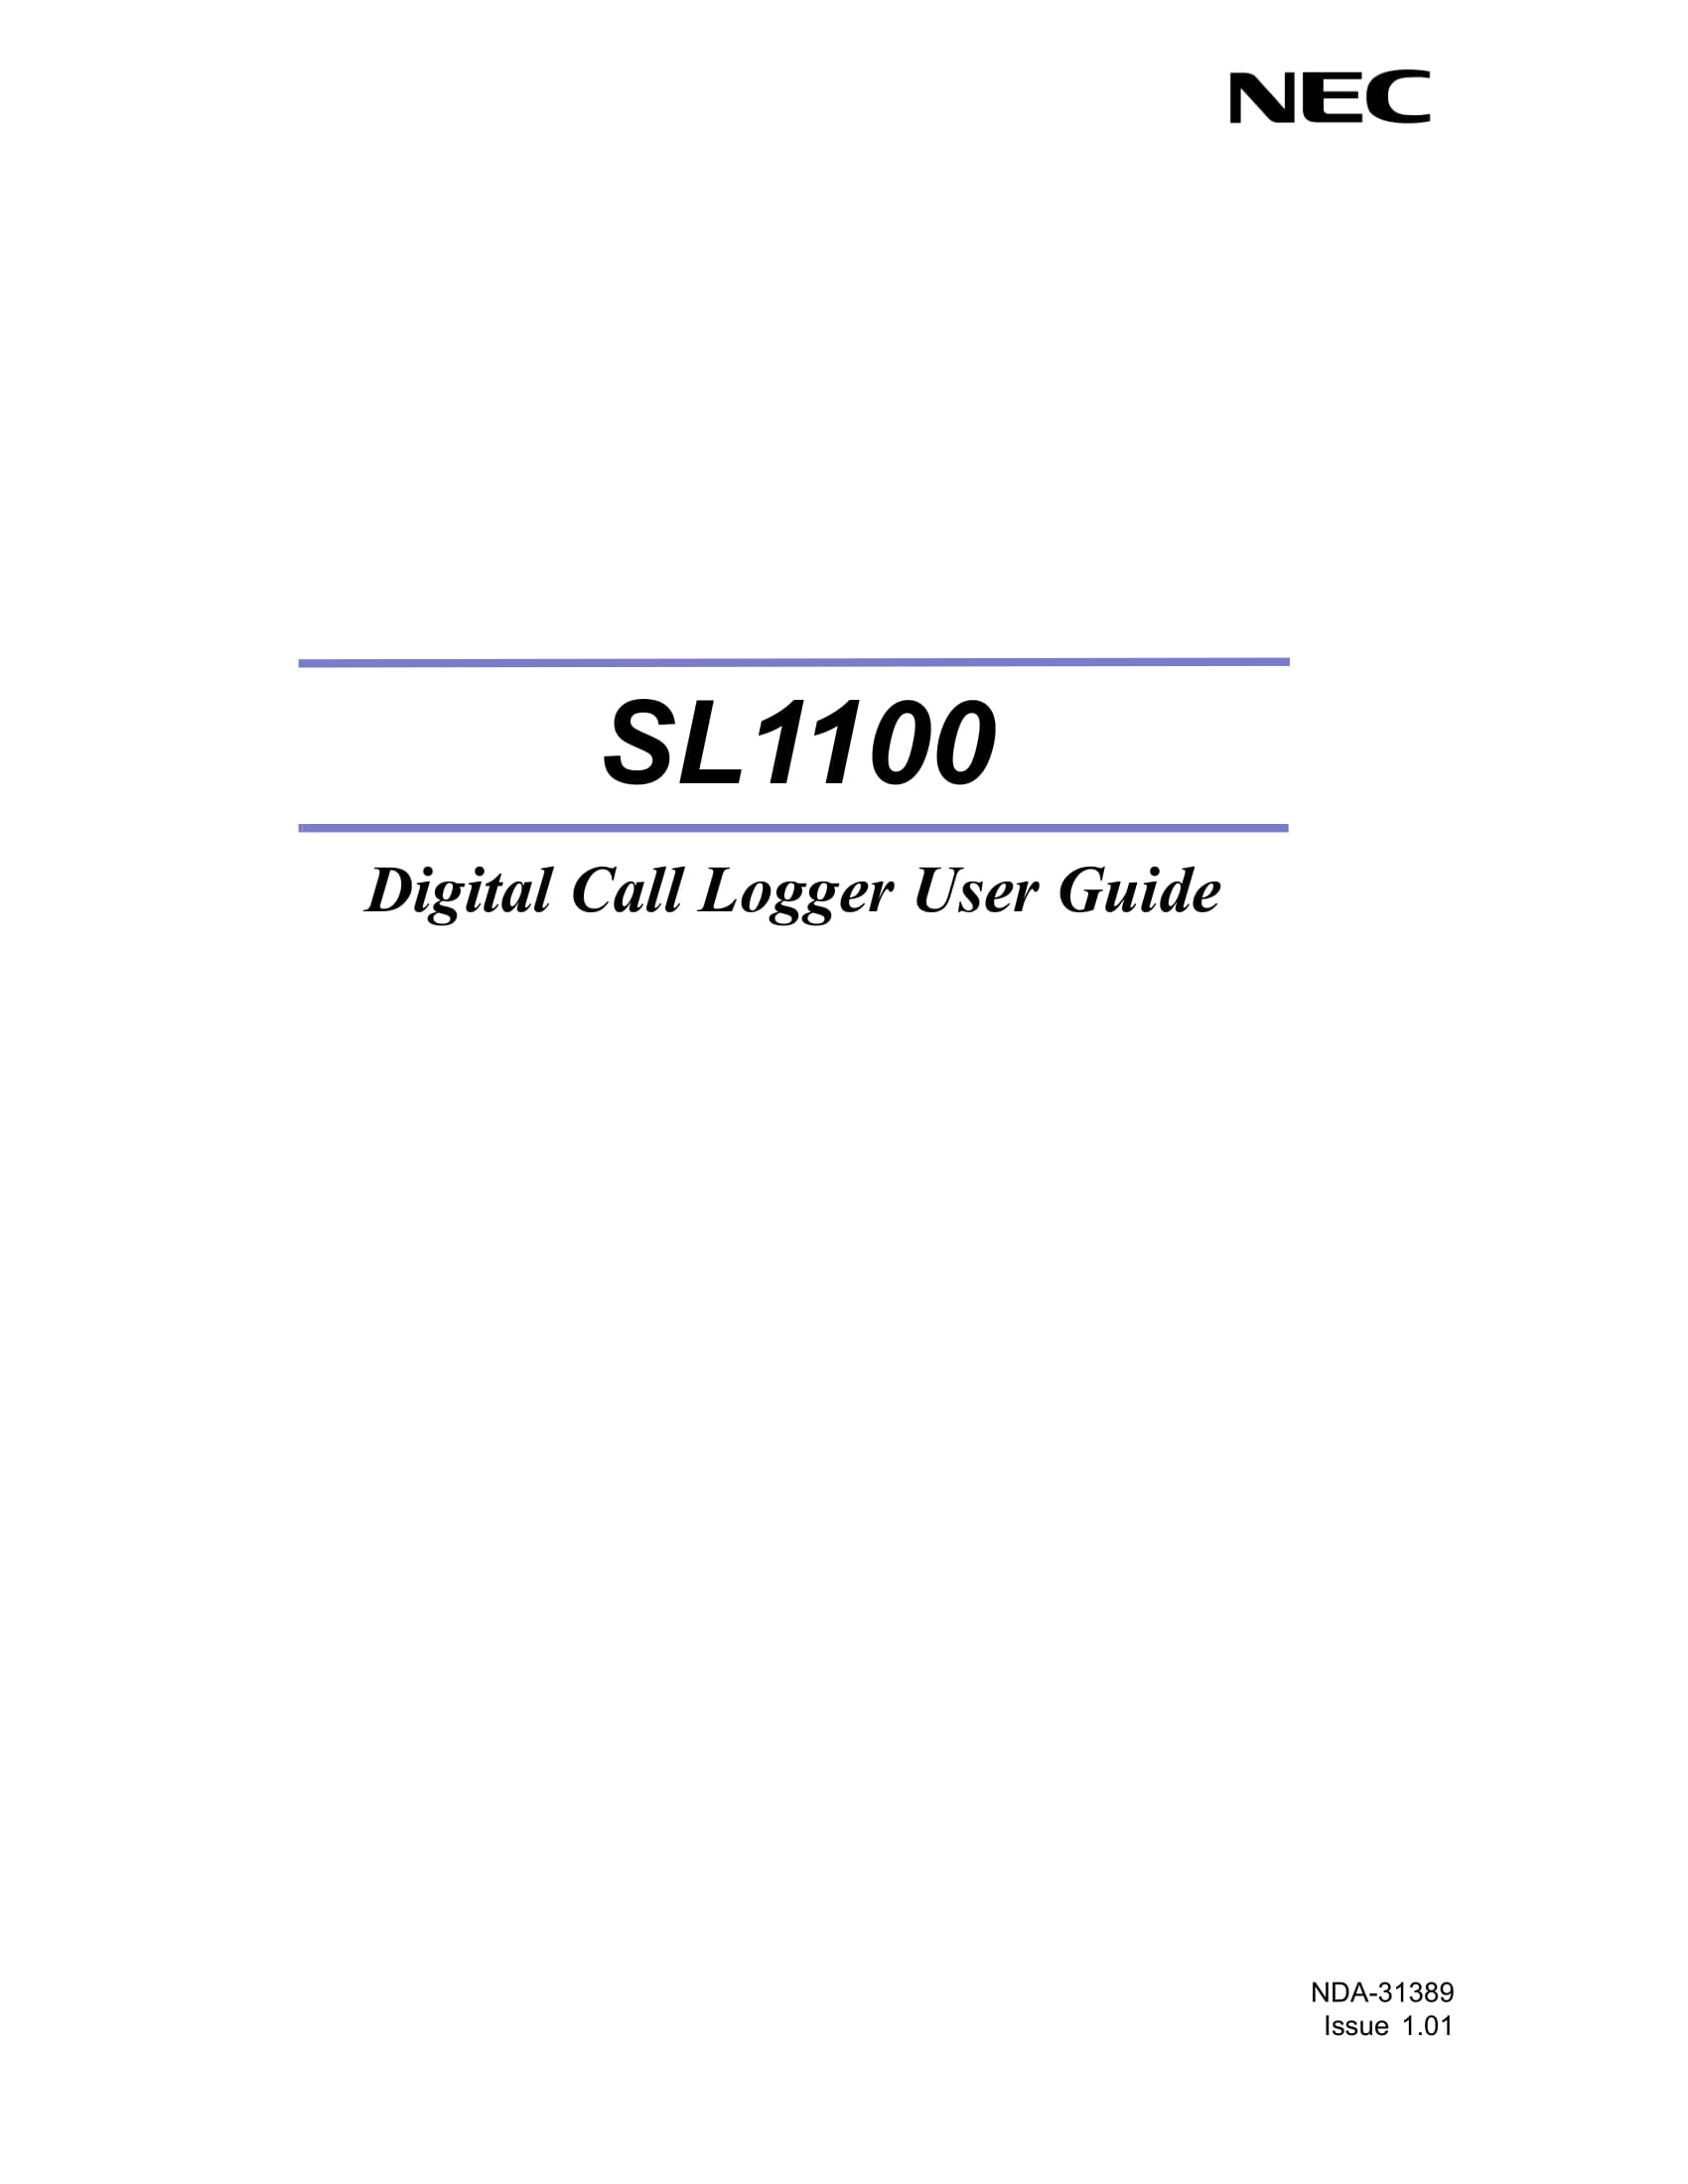 digital call logger user guide example 01